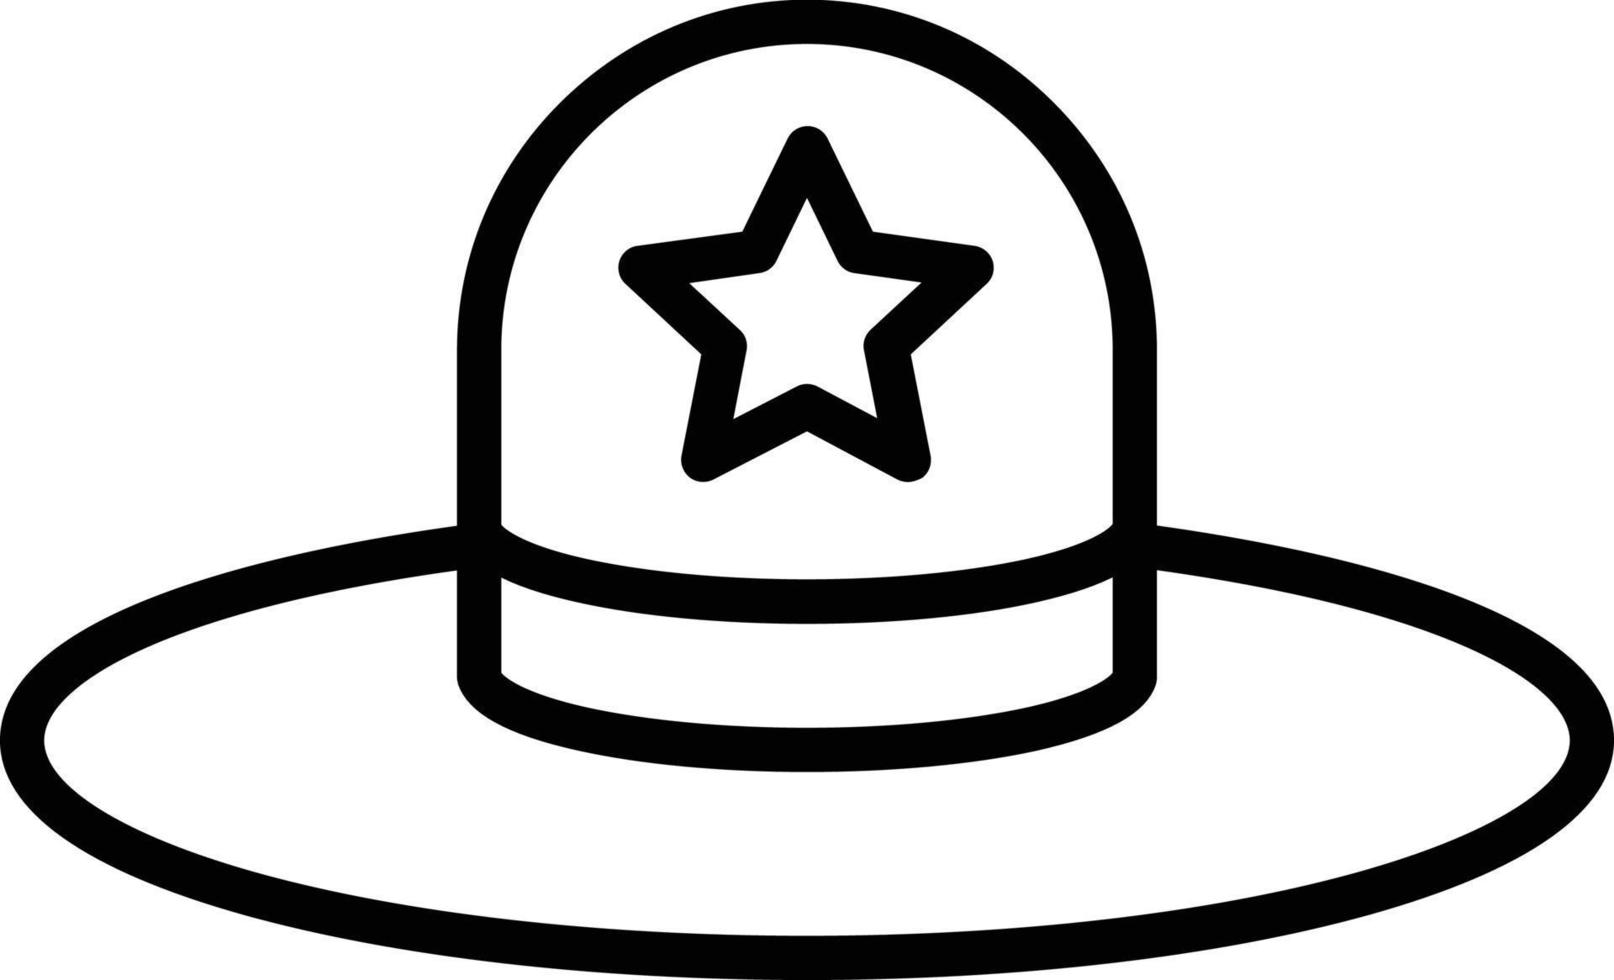 Hat Vector Line Icon